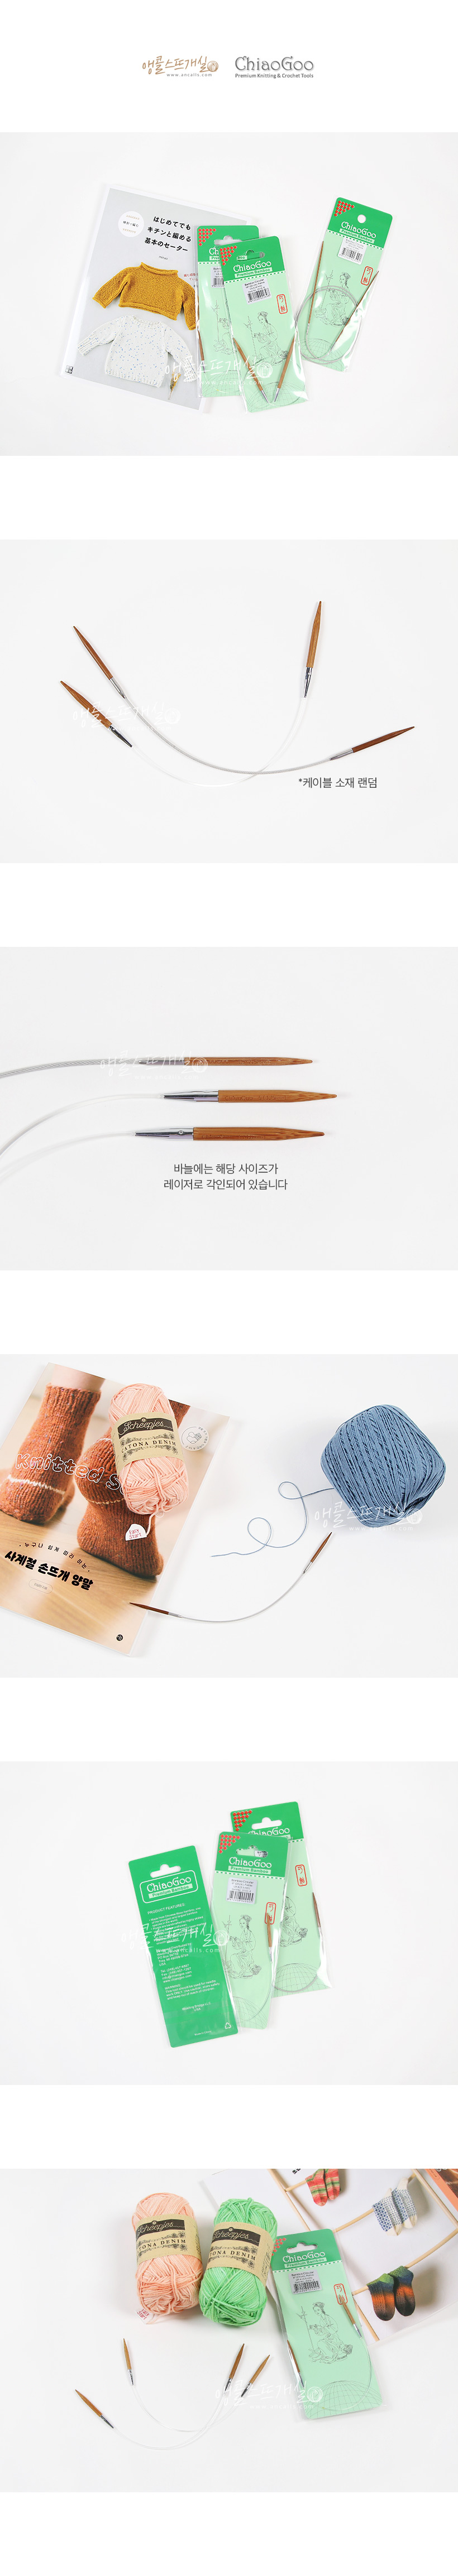 ChiaoGoo Circular 9-inch 23cm Bamboo Dark Patina Knitting Needle; Size US 5 2009-5 3.75mm 